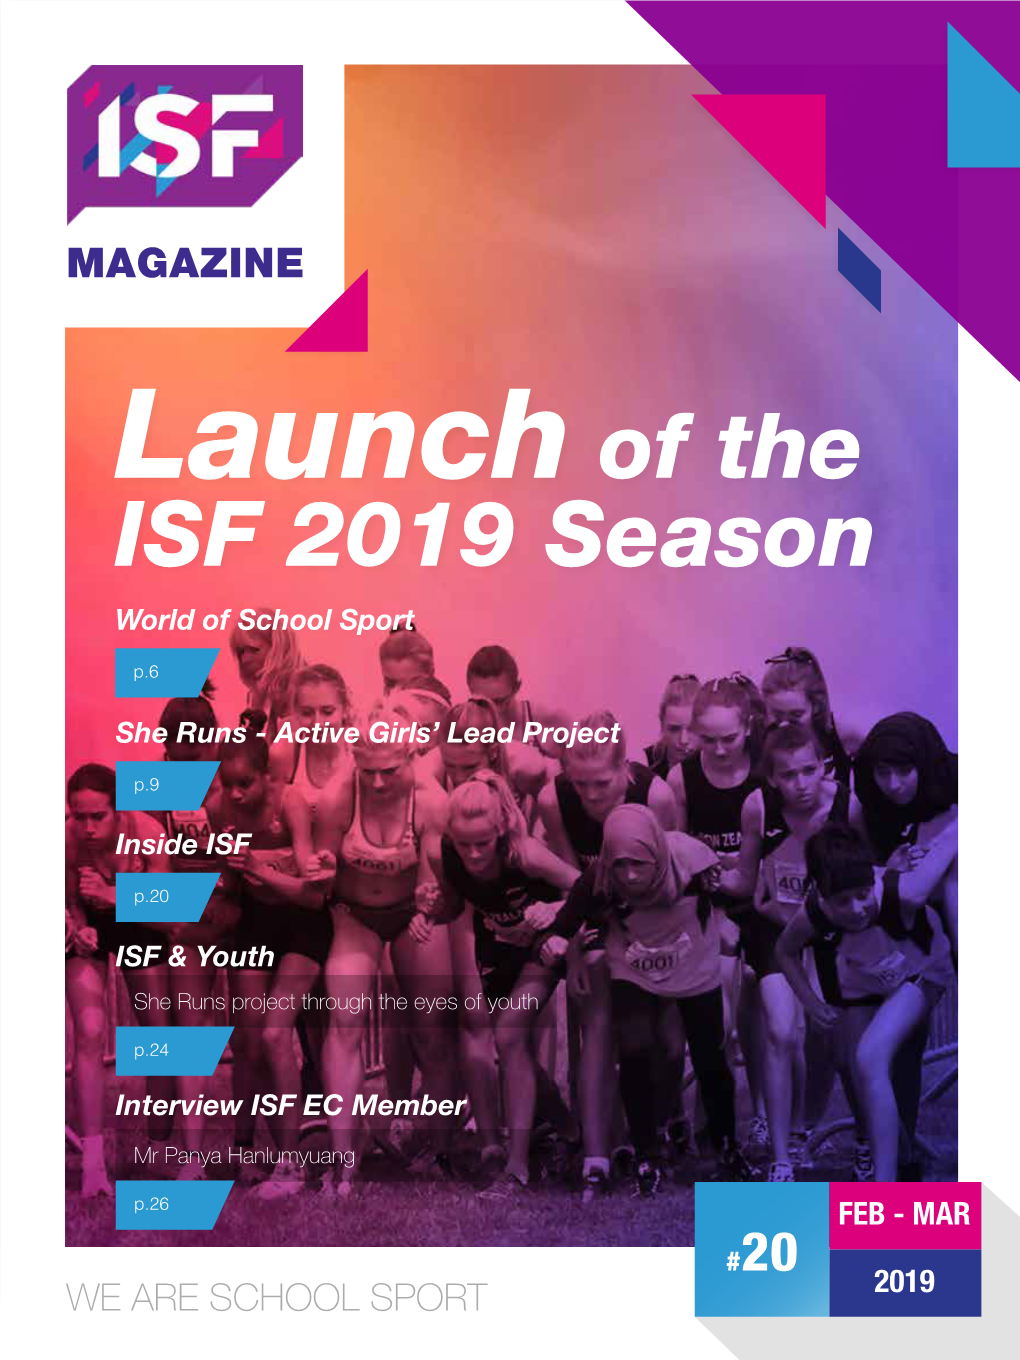 ISF 2019 Season World of School Sport